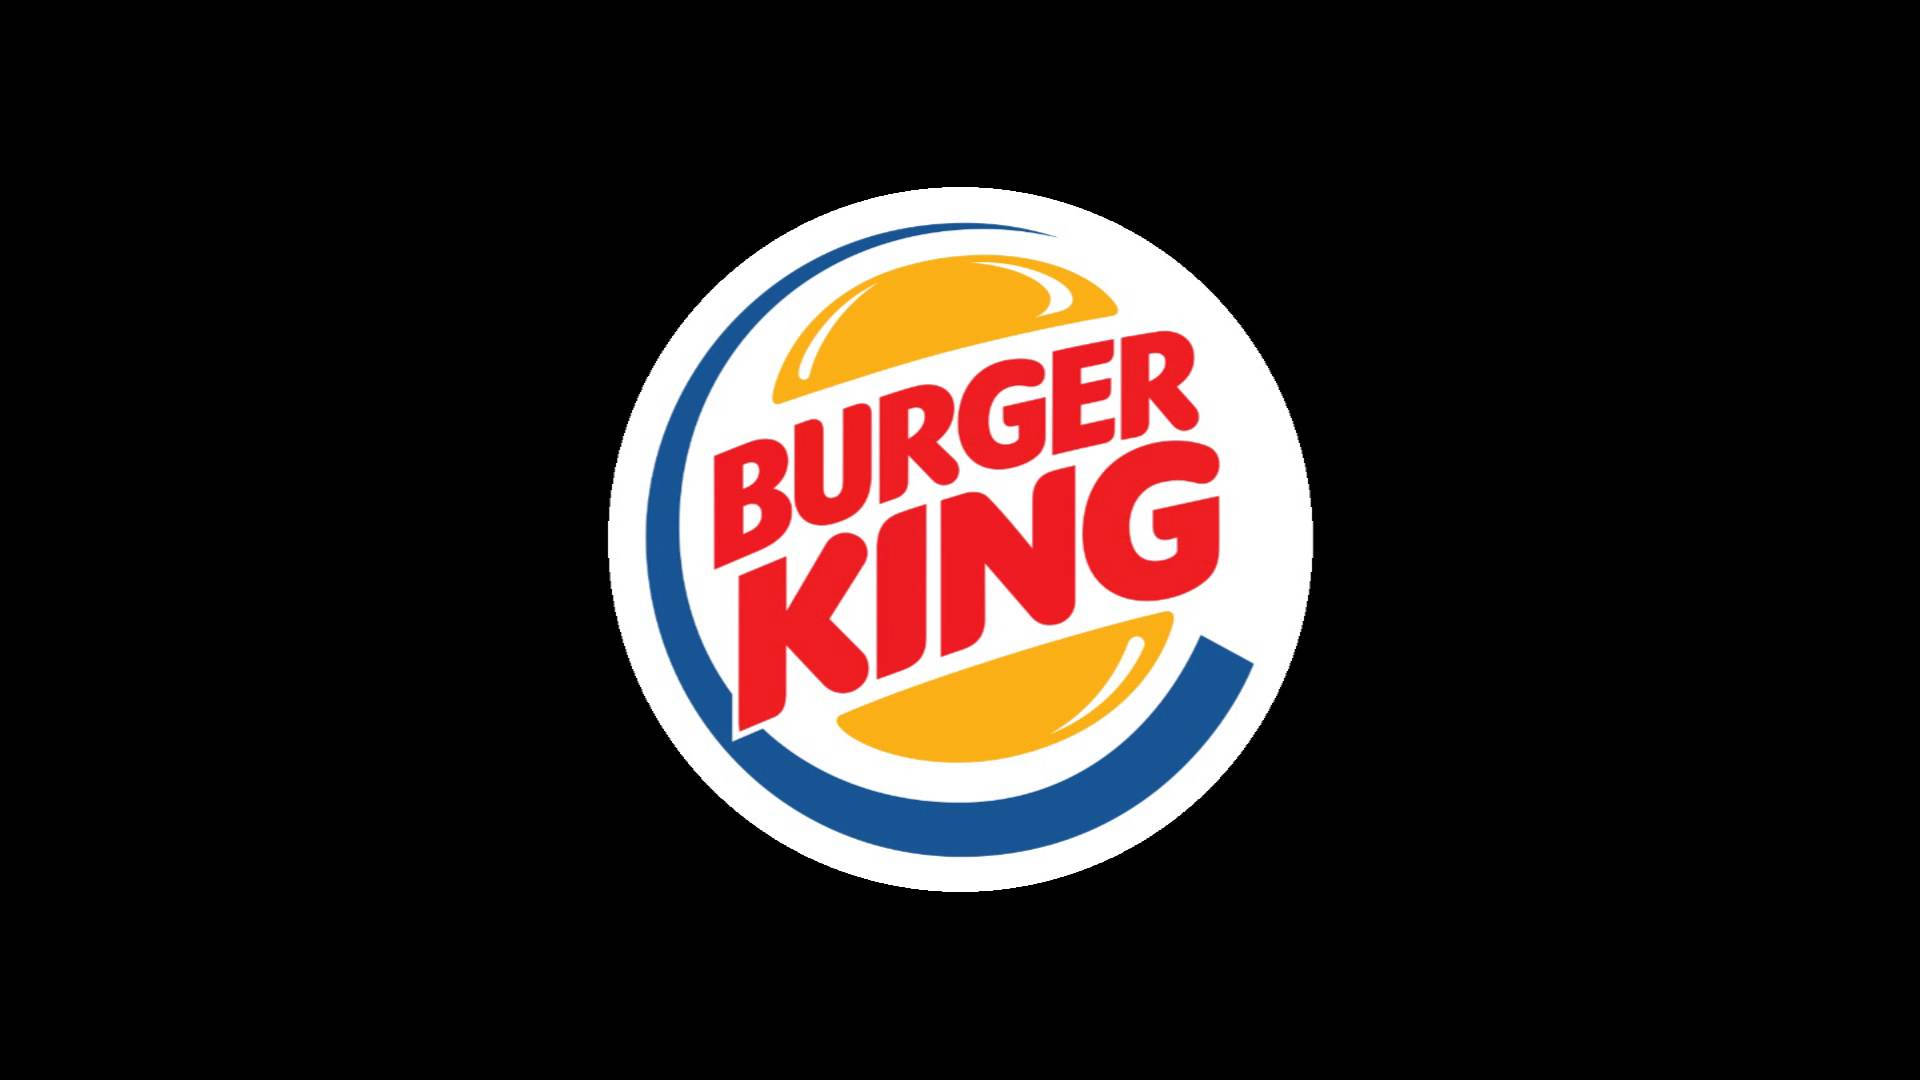 Burger King Wallpaper Images